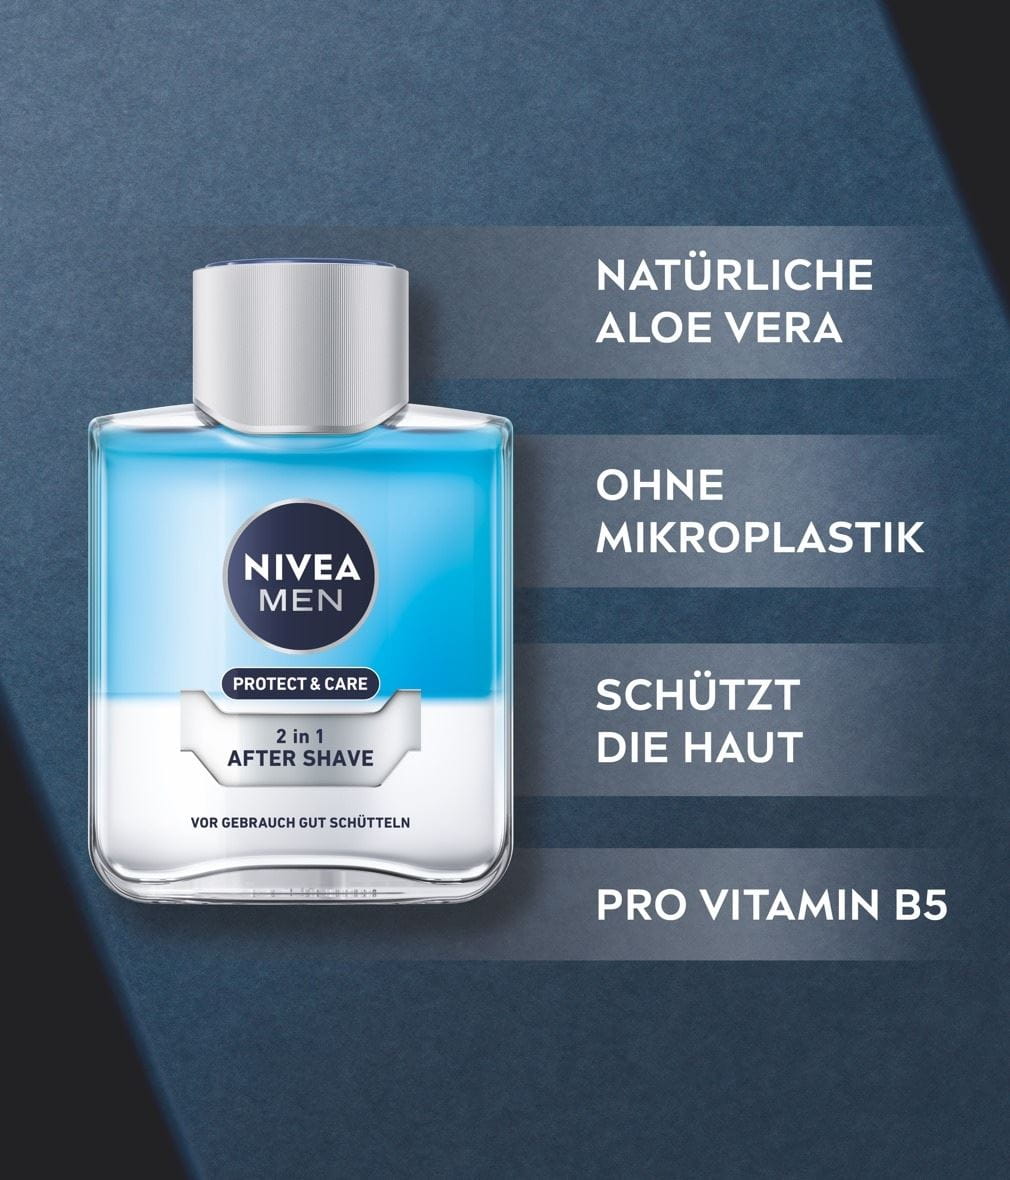 NIVEA MEN Protect & Care After Shave 2in1 Produktabbildung mit Benefits